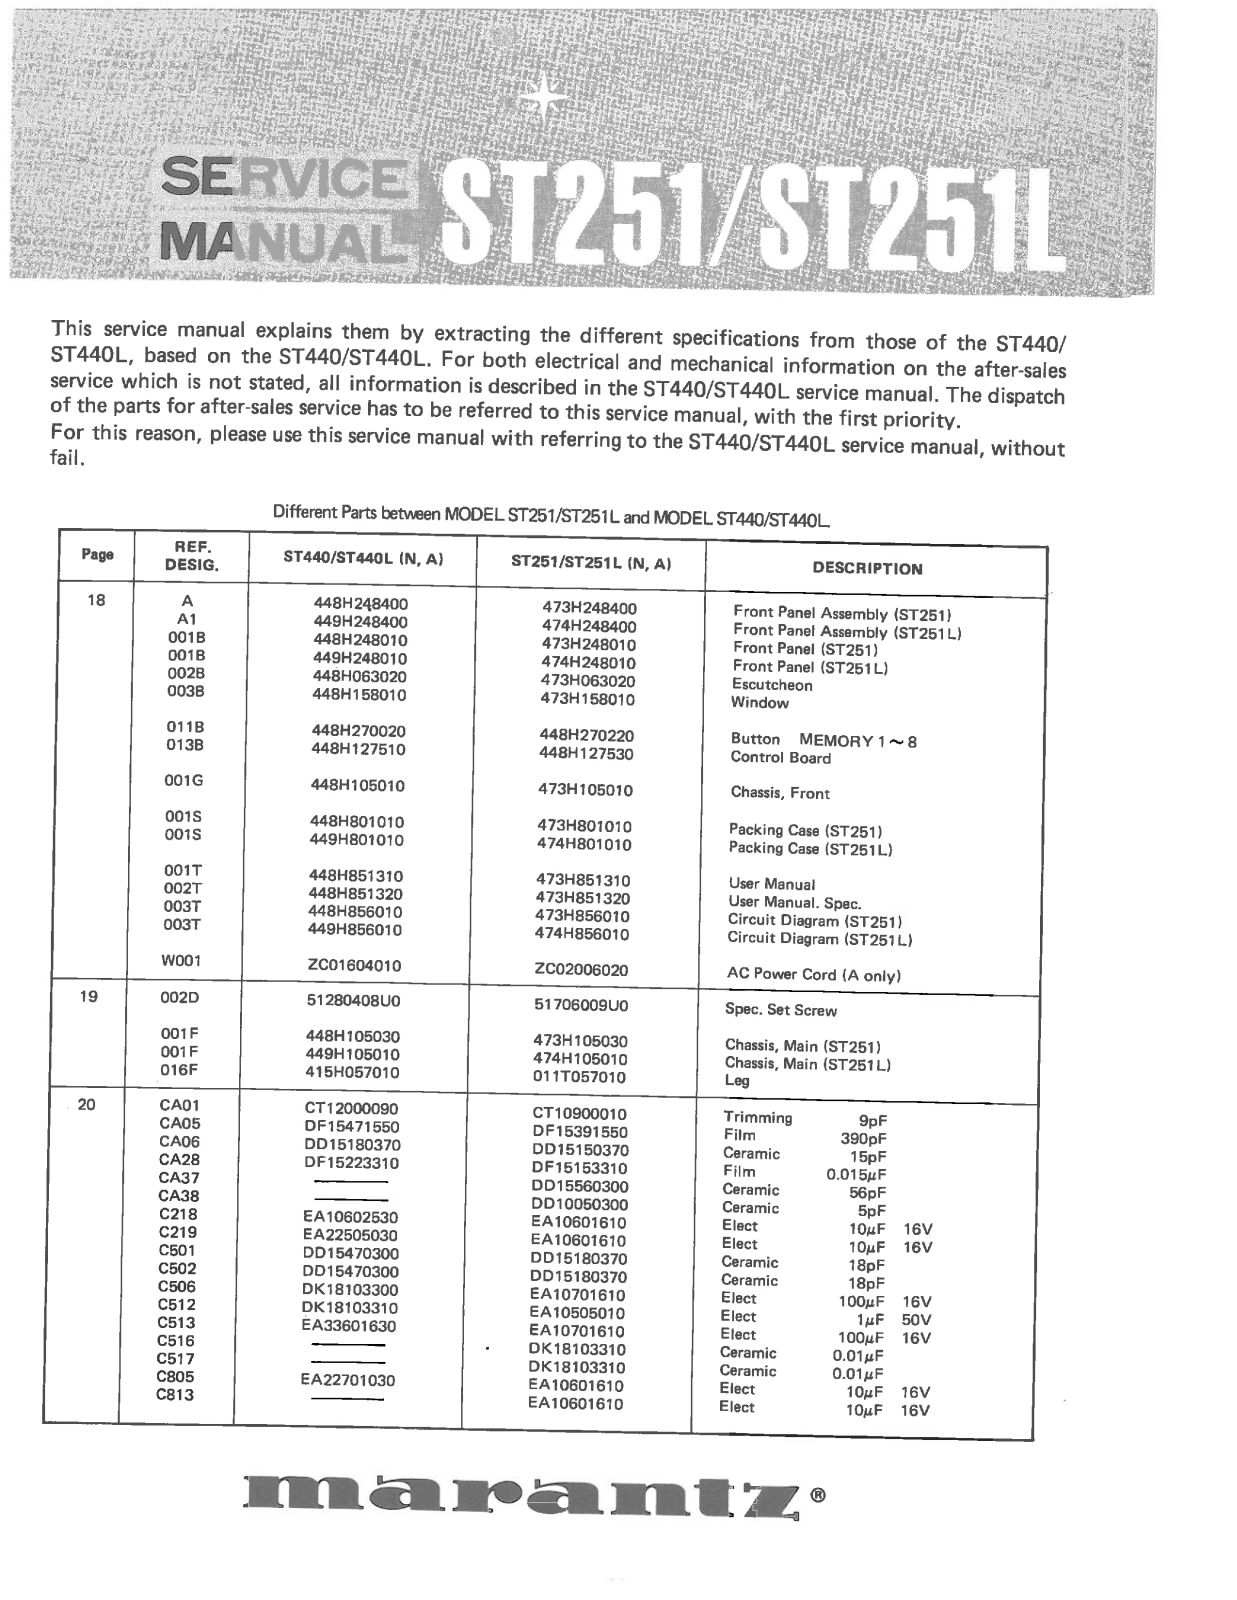 Marantz ST-251 Service Manual